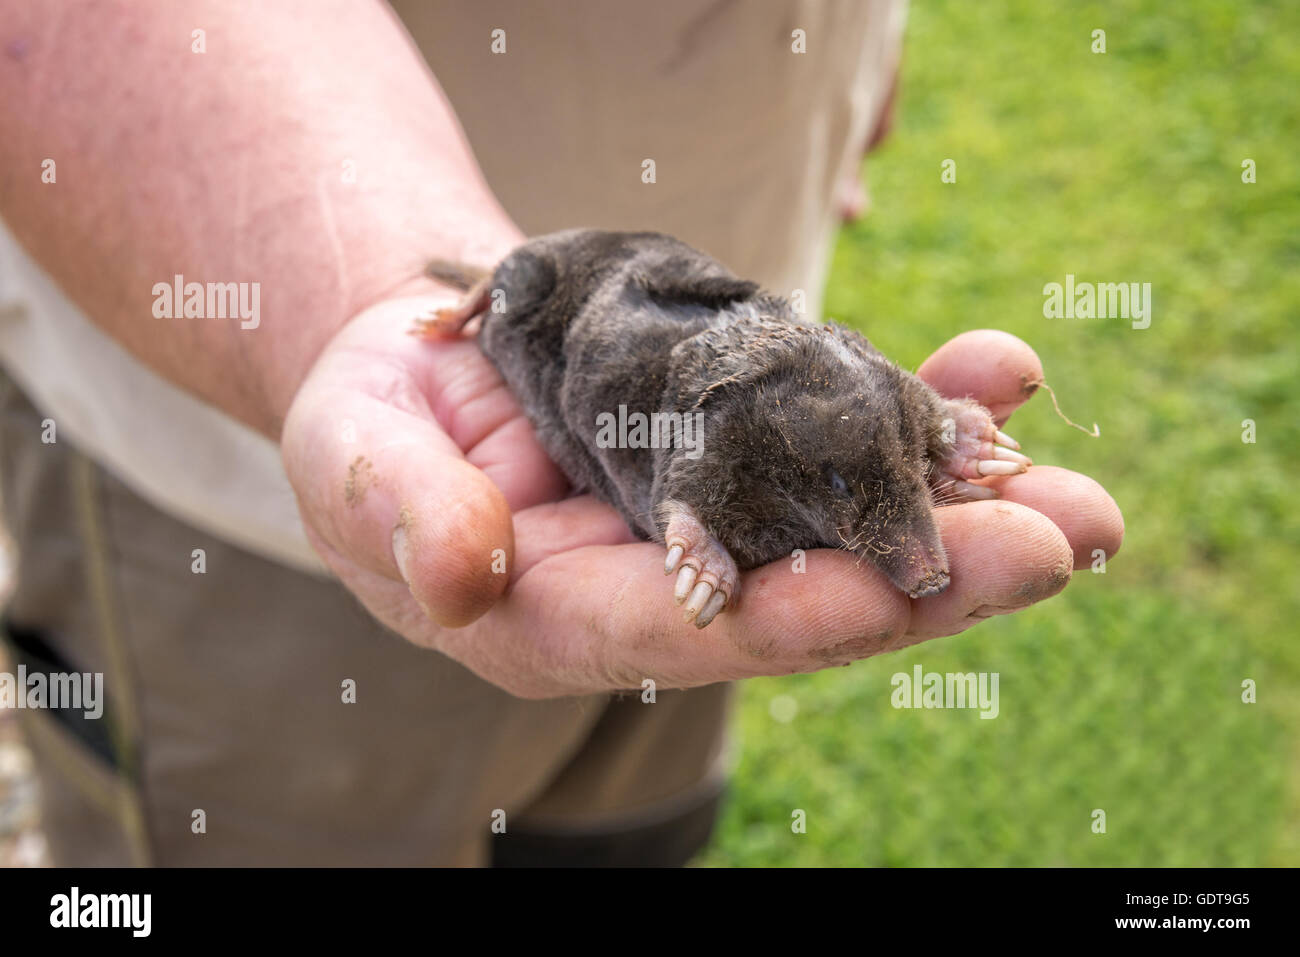 Dead mole in a hand, garden background Stock Photo